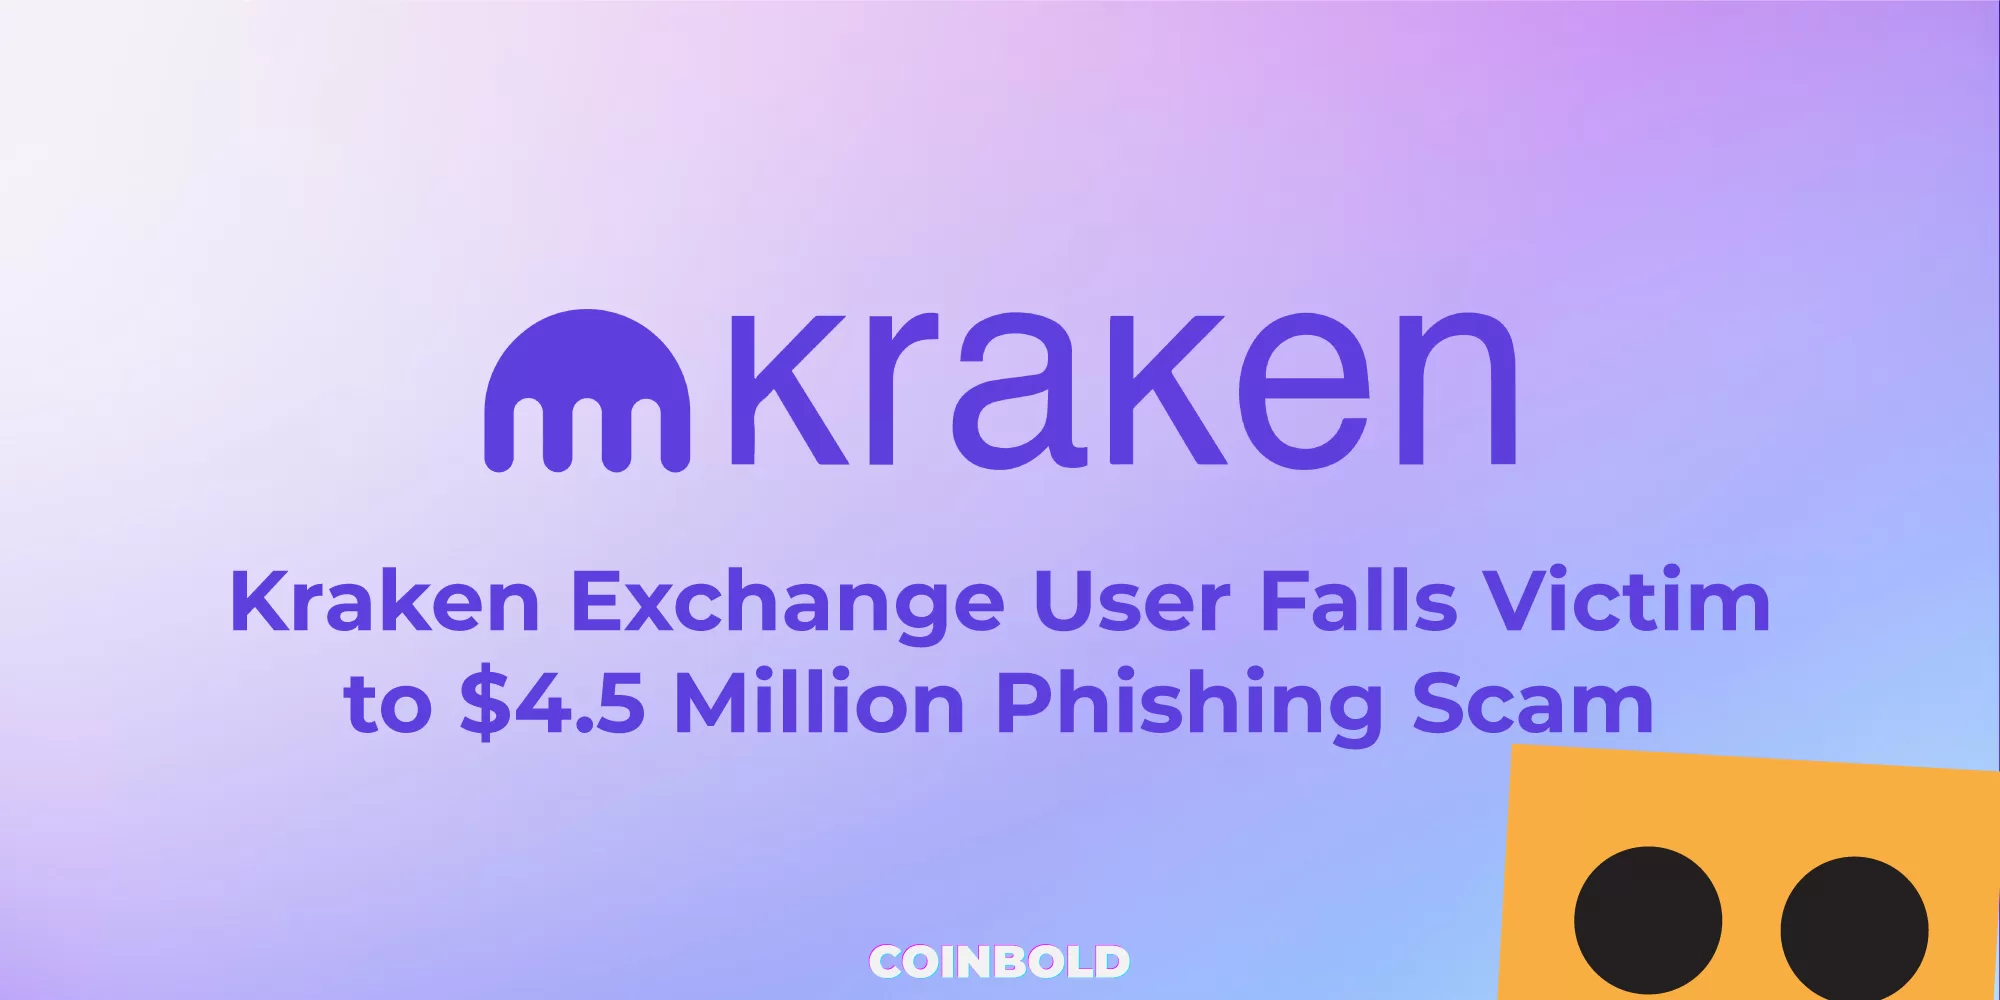 Kraken Exchange User Falls Victim to $4.5 Million Phishing Scam